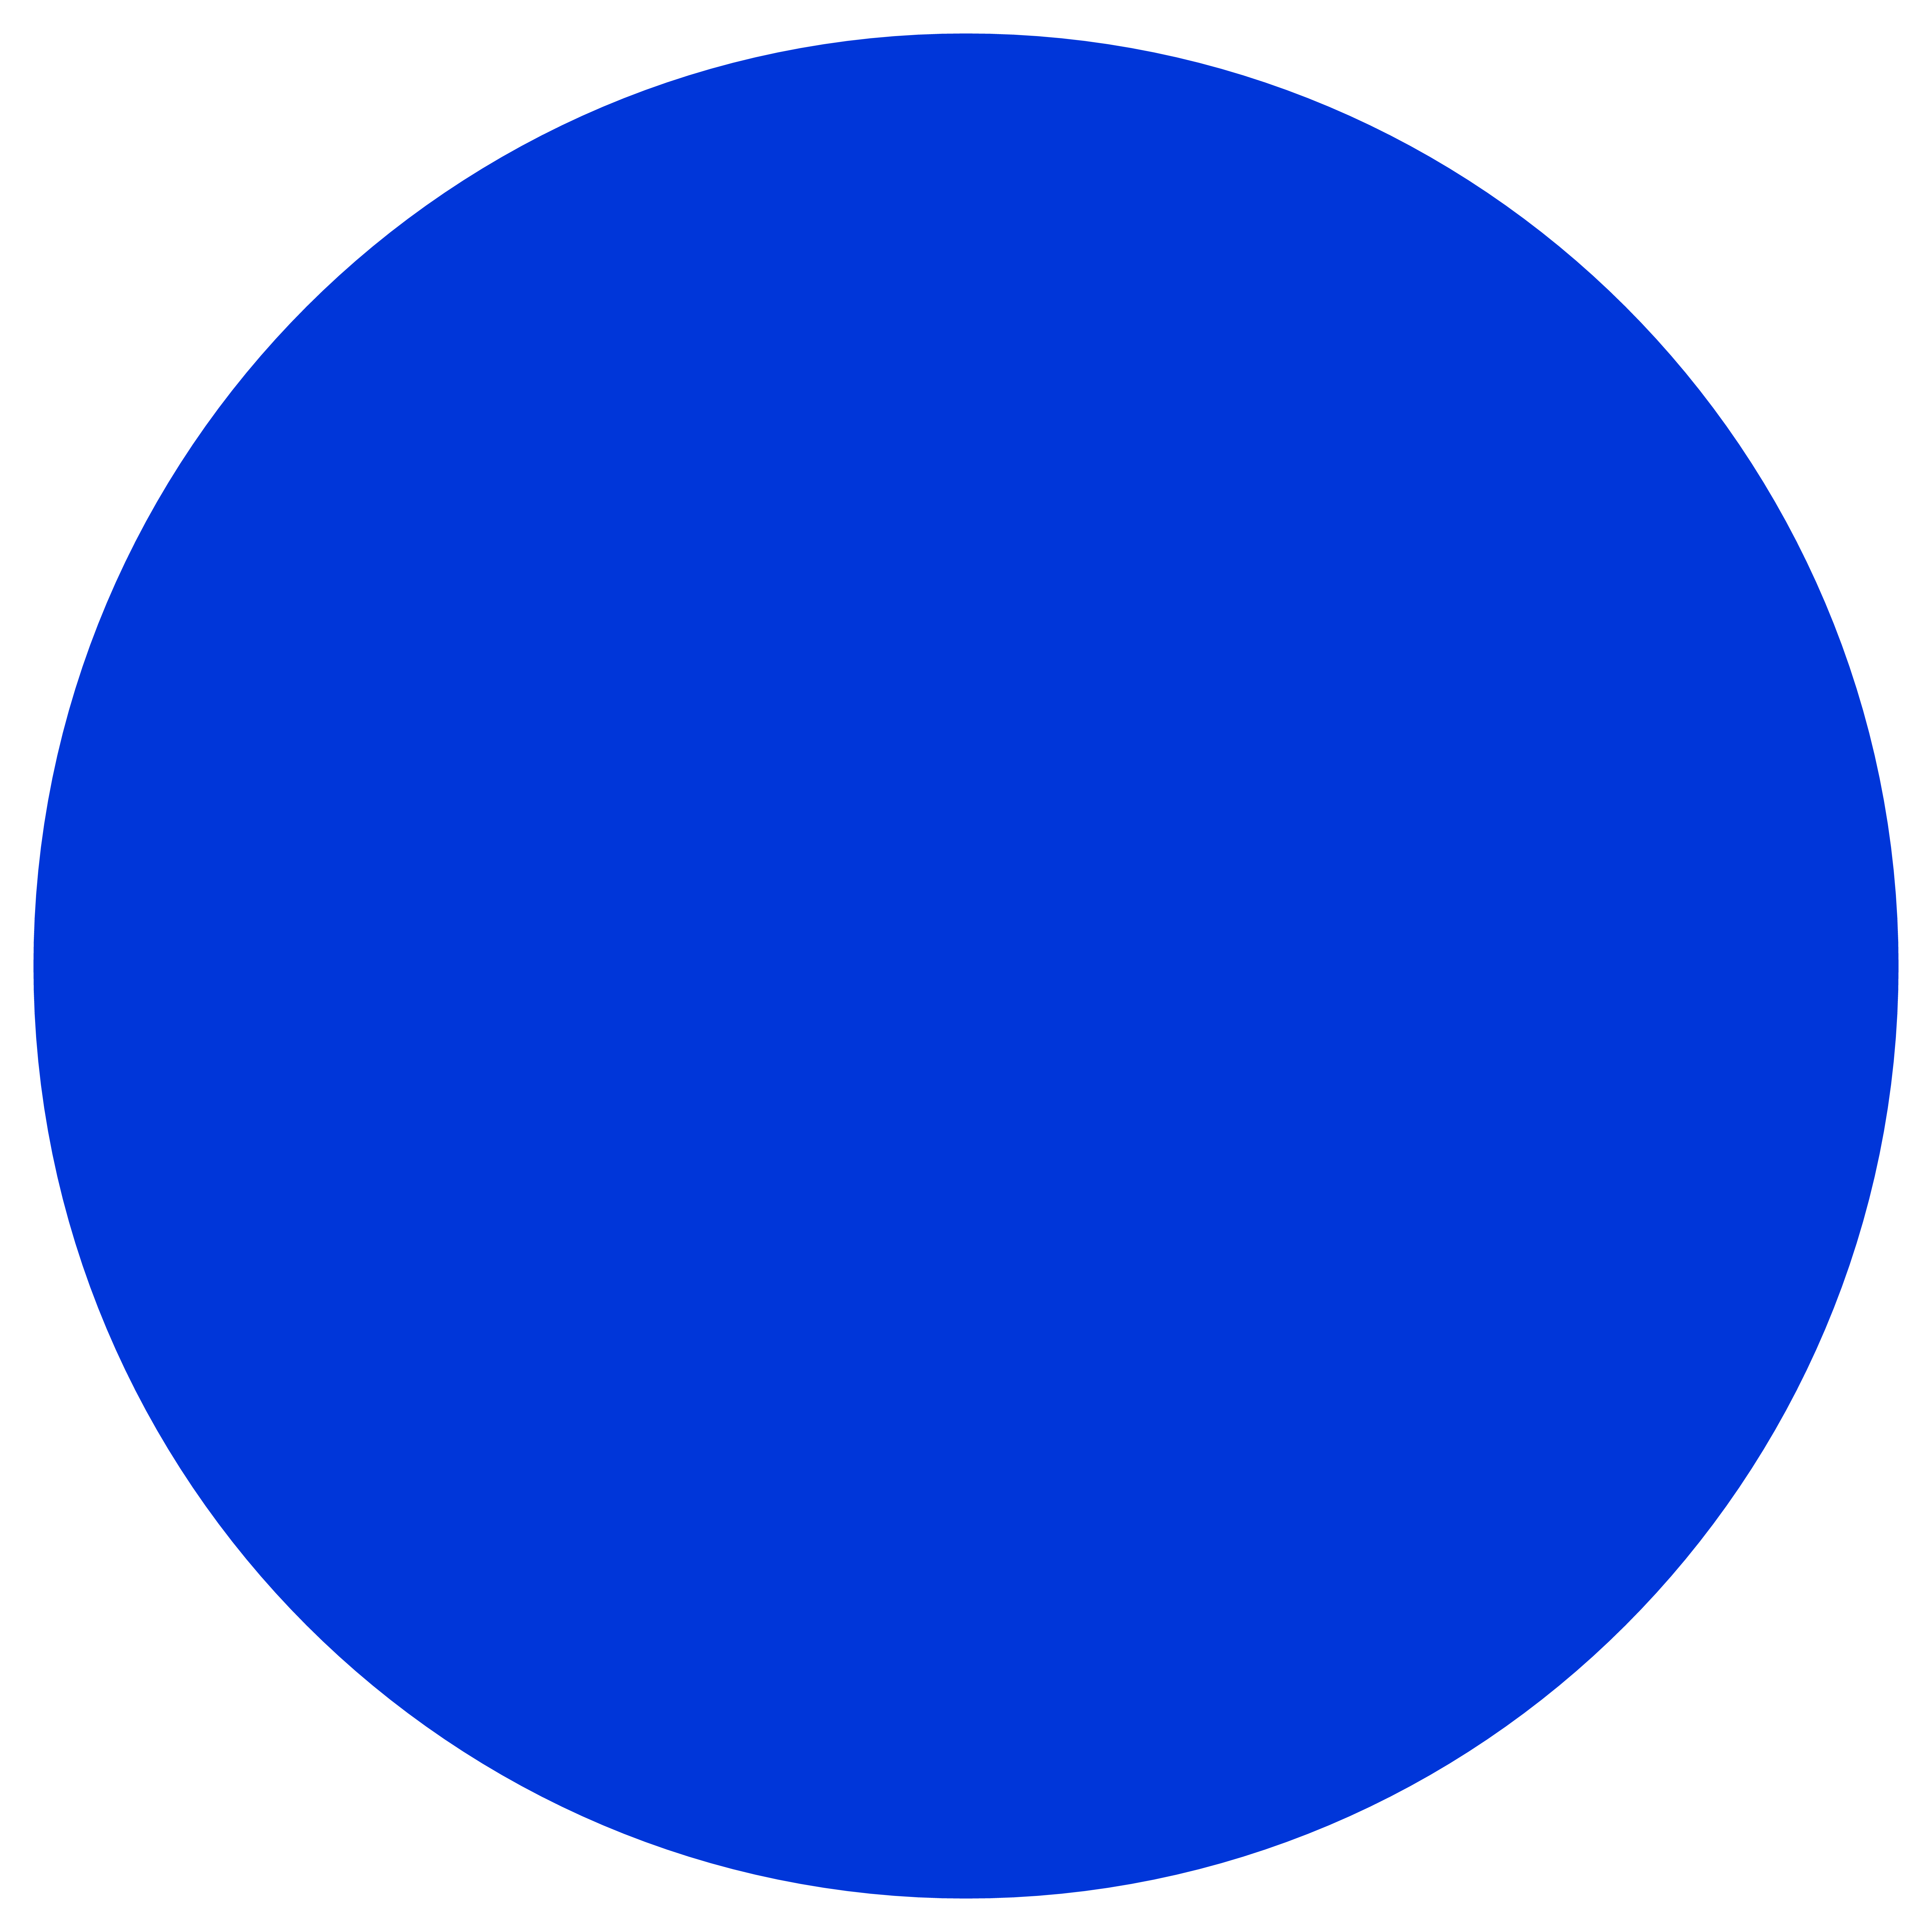 Круг на прозрачном фоне картинки для детей. Синий кружок. Голубой круг. Синий круг на прозрачном фоне. Синие кружочки.